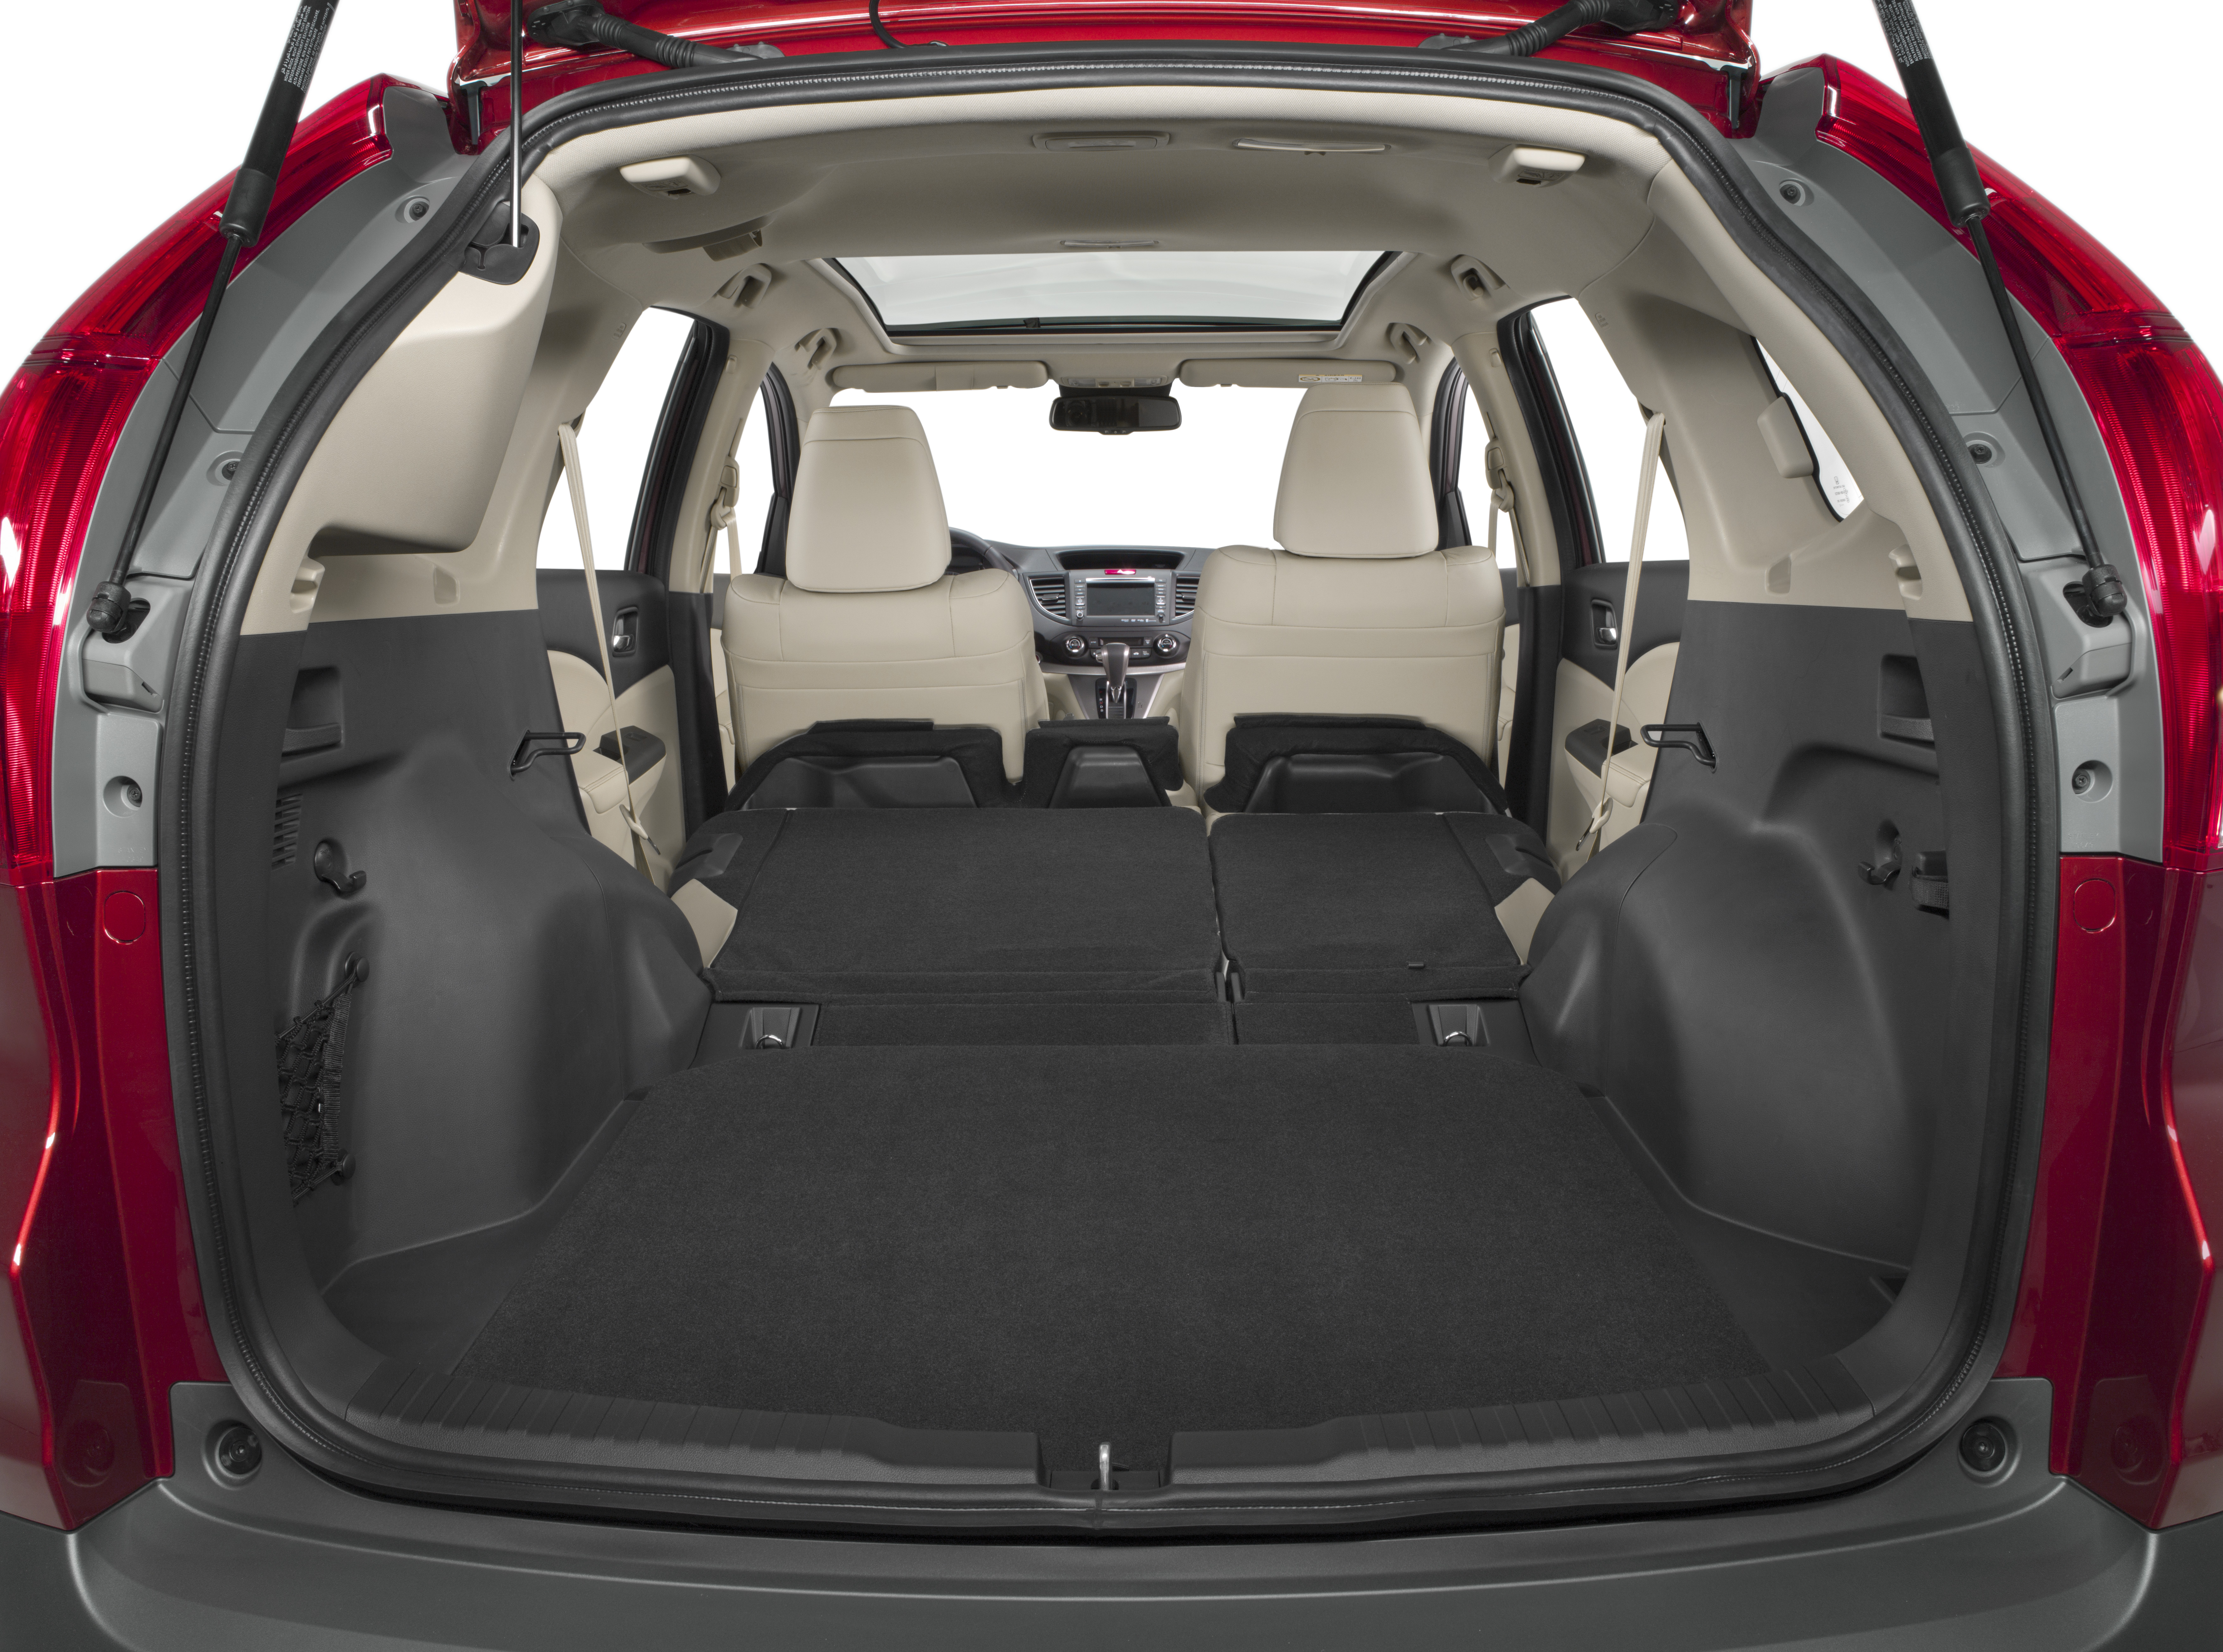 Багажник honda crv. Honda CR-V 2013 багажник. Honda CR-V 4 багажник. Хонда CRV багажник. Honda CRV 4 багажник.